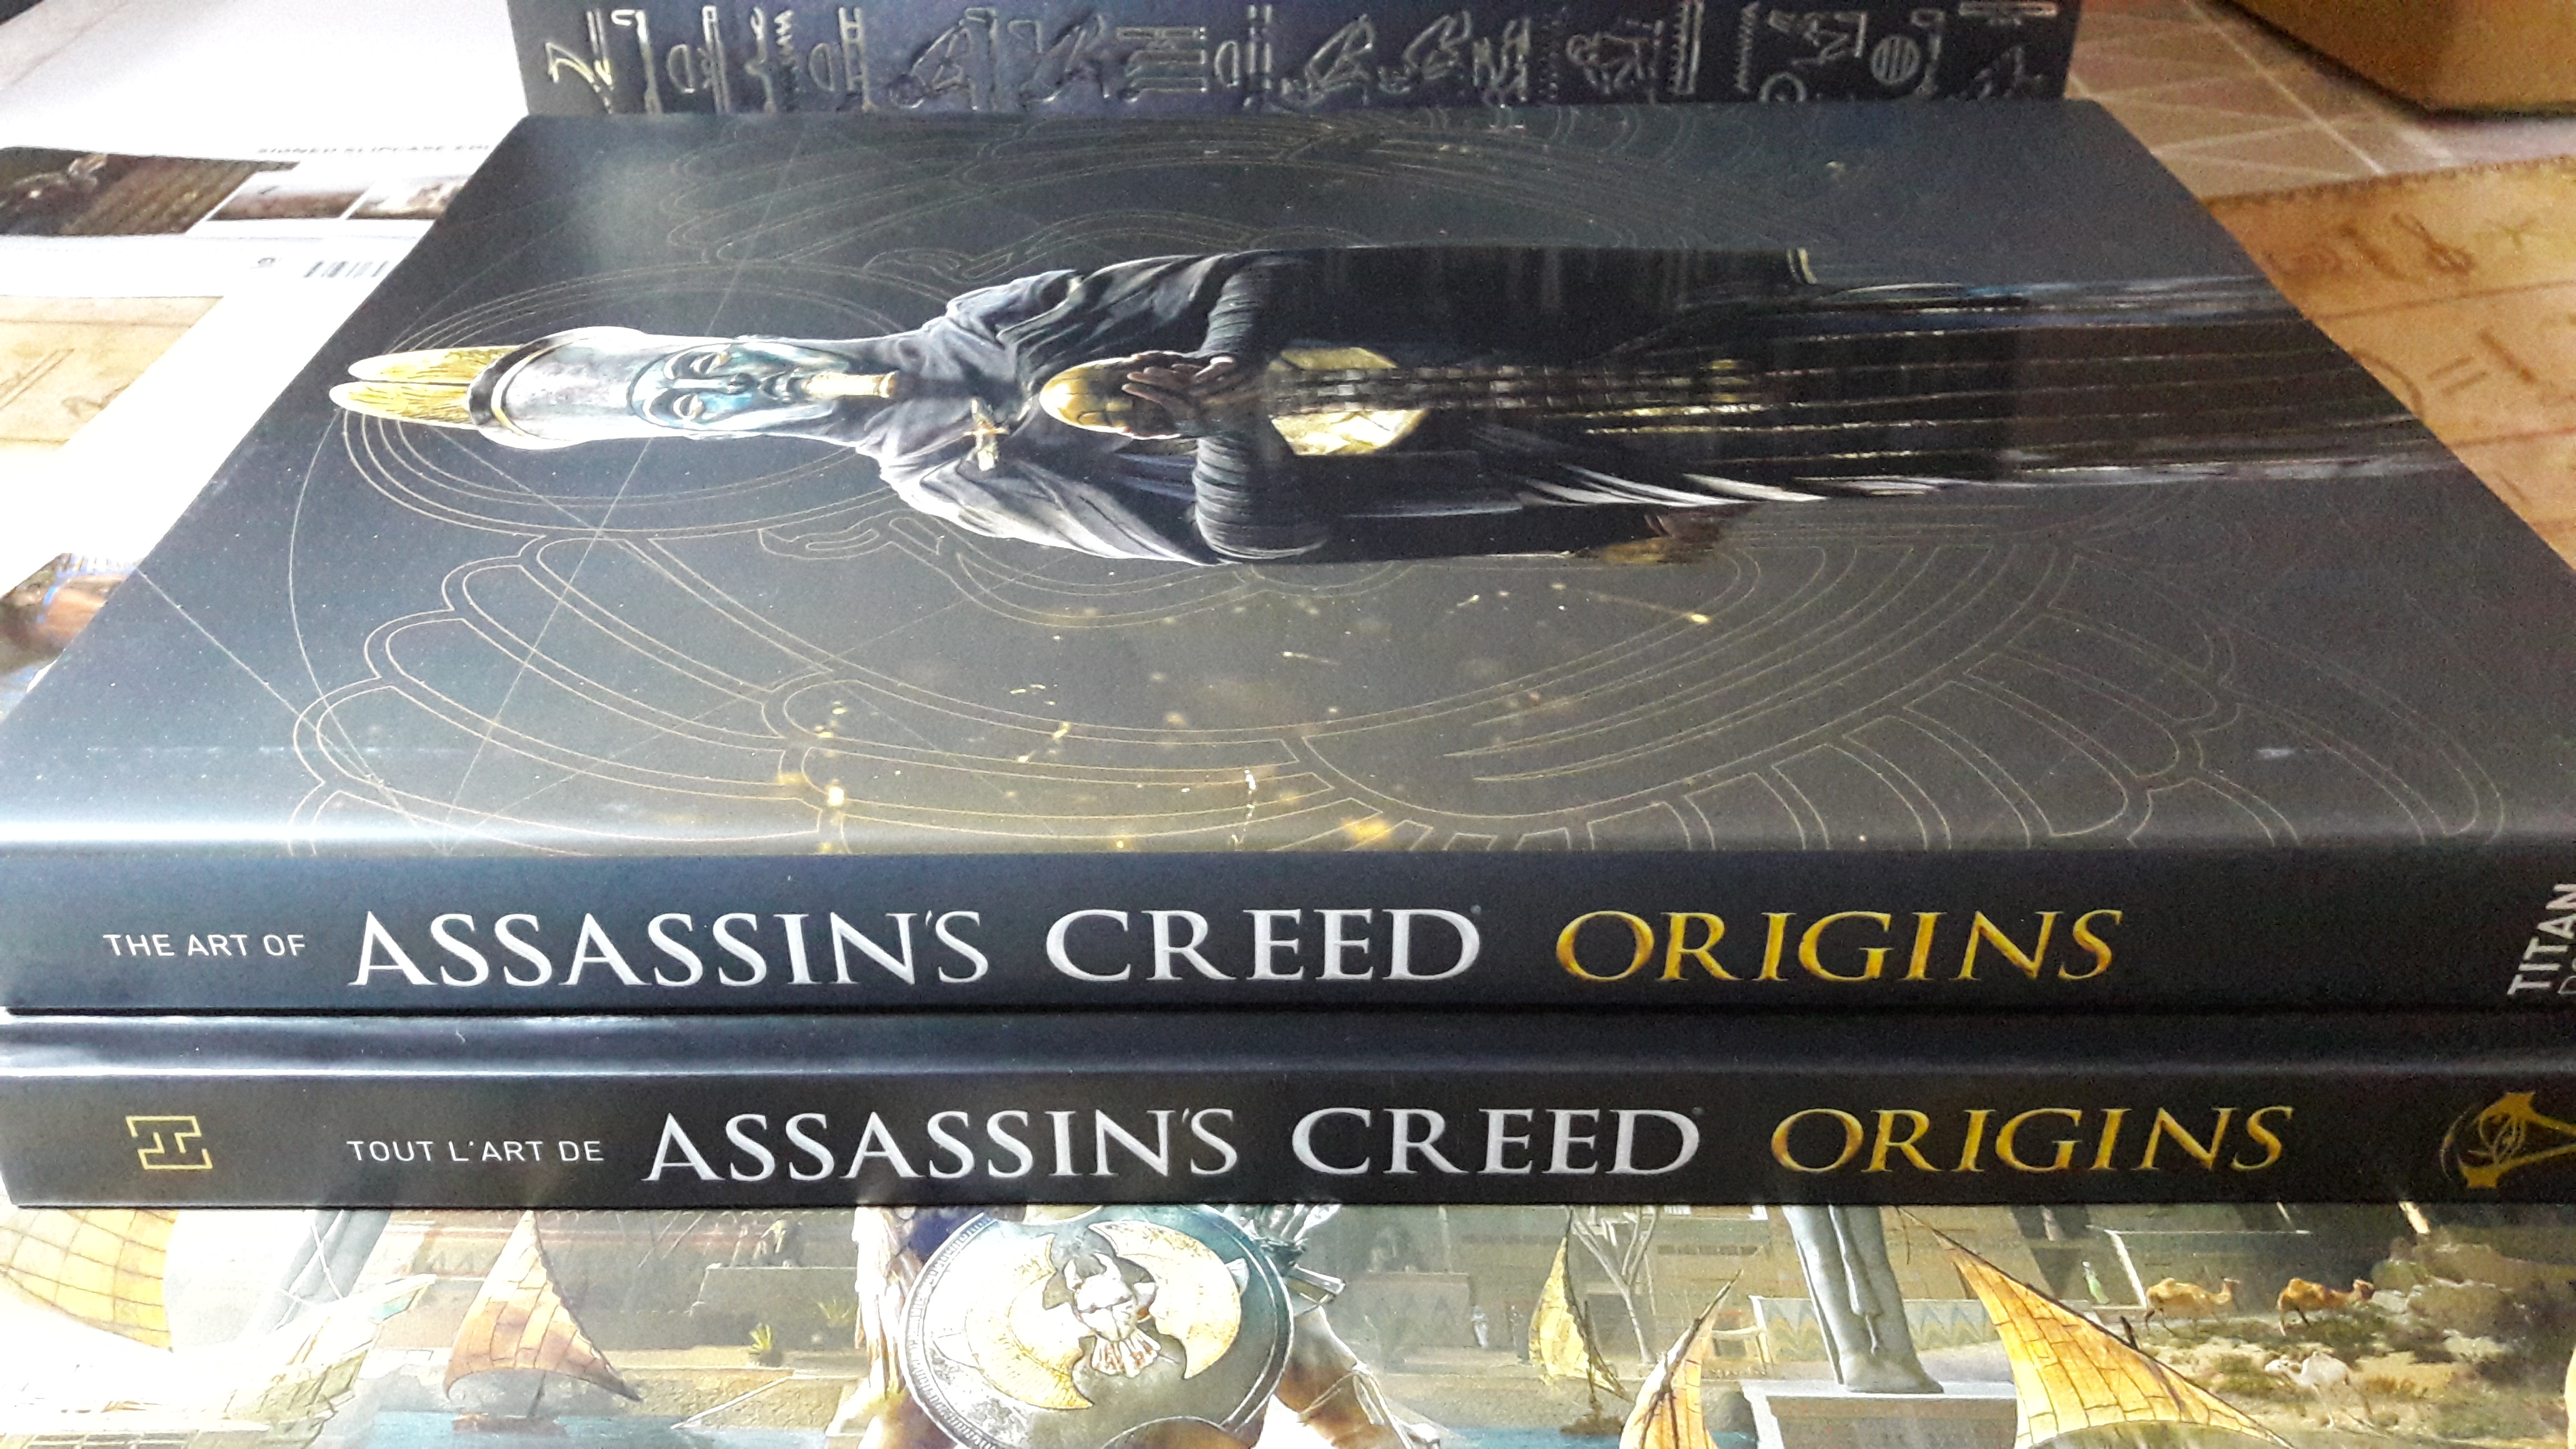 Assassin's Creed Origins artbook